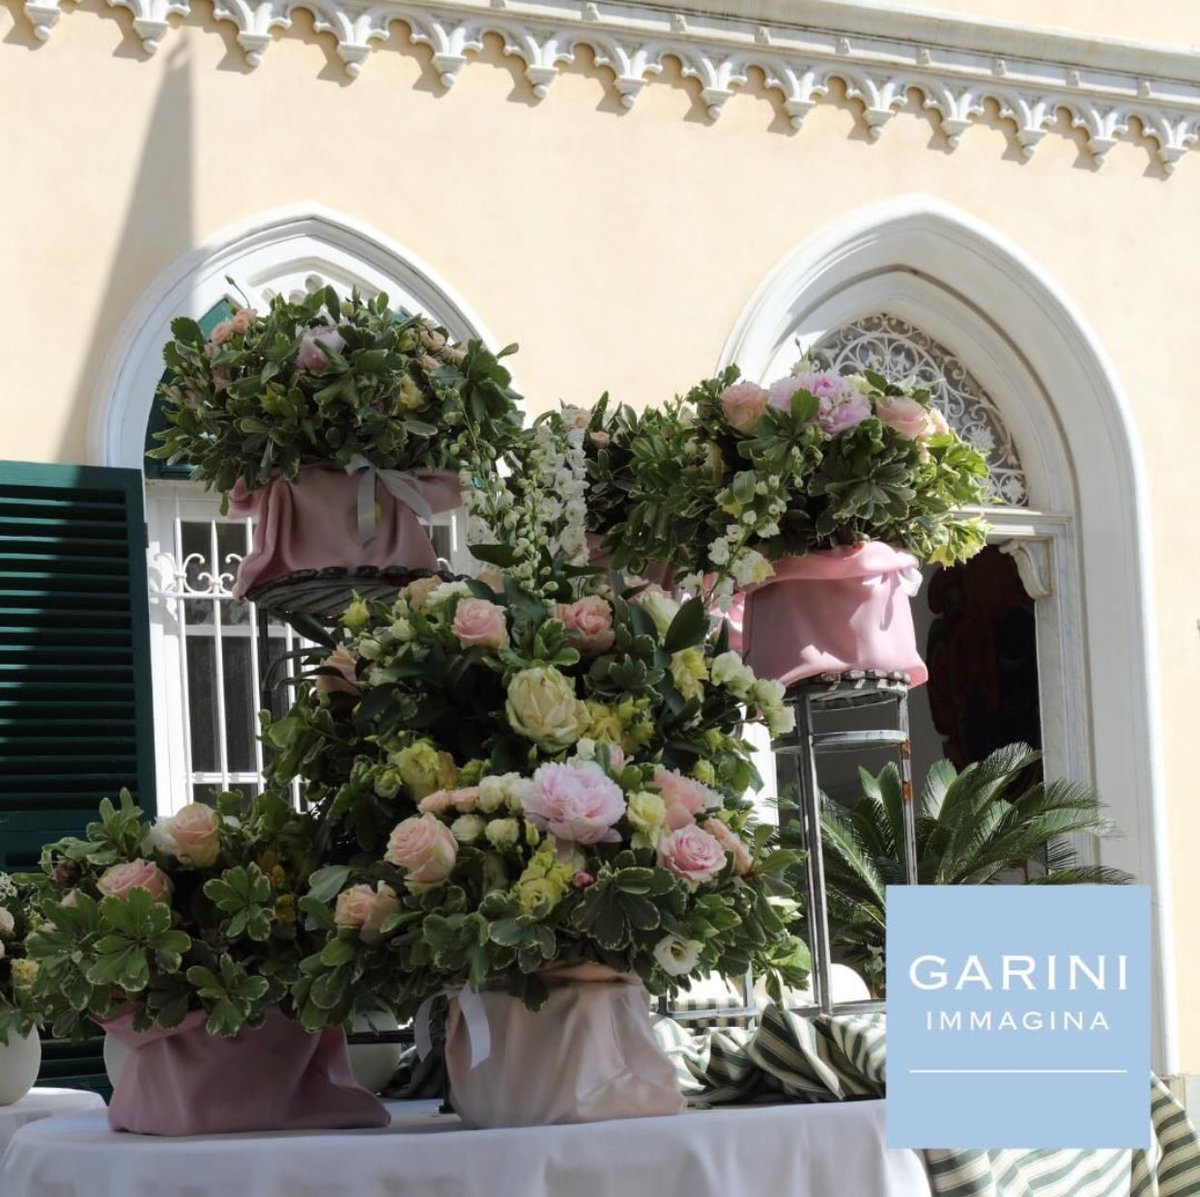 Palette of pink for a wedding in Liguria 〰️ #angelogarini #gariniwedding #gariniimmagina #destinationweddingphotographers #destinationweddinginitaly #destinationweddings #italianweddingplanner #italianstyle #bestofitaly #Italy #madeinItaly